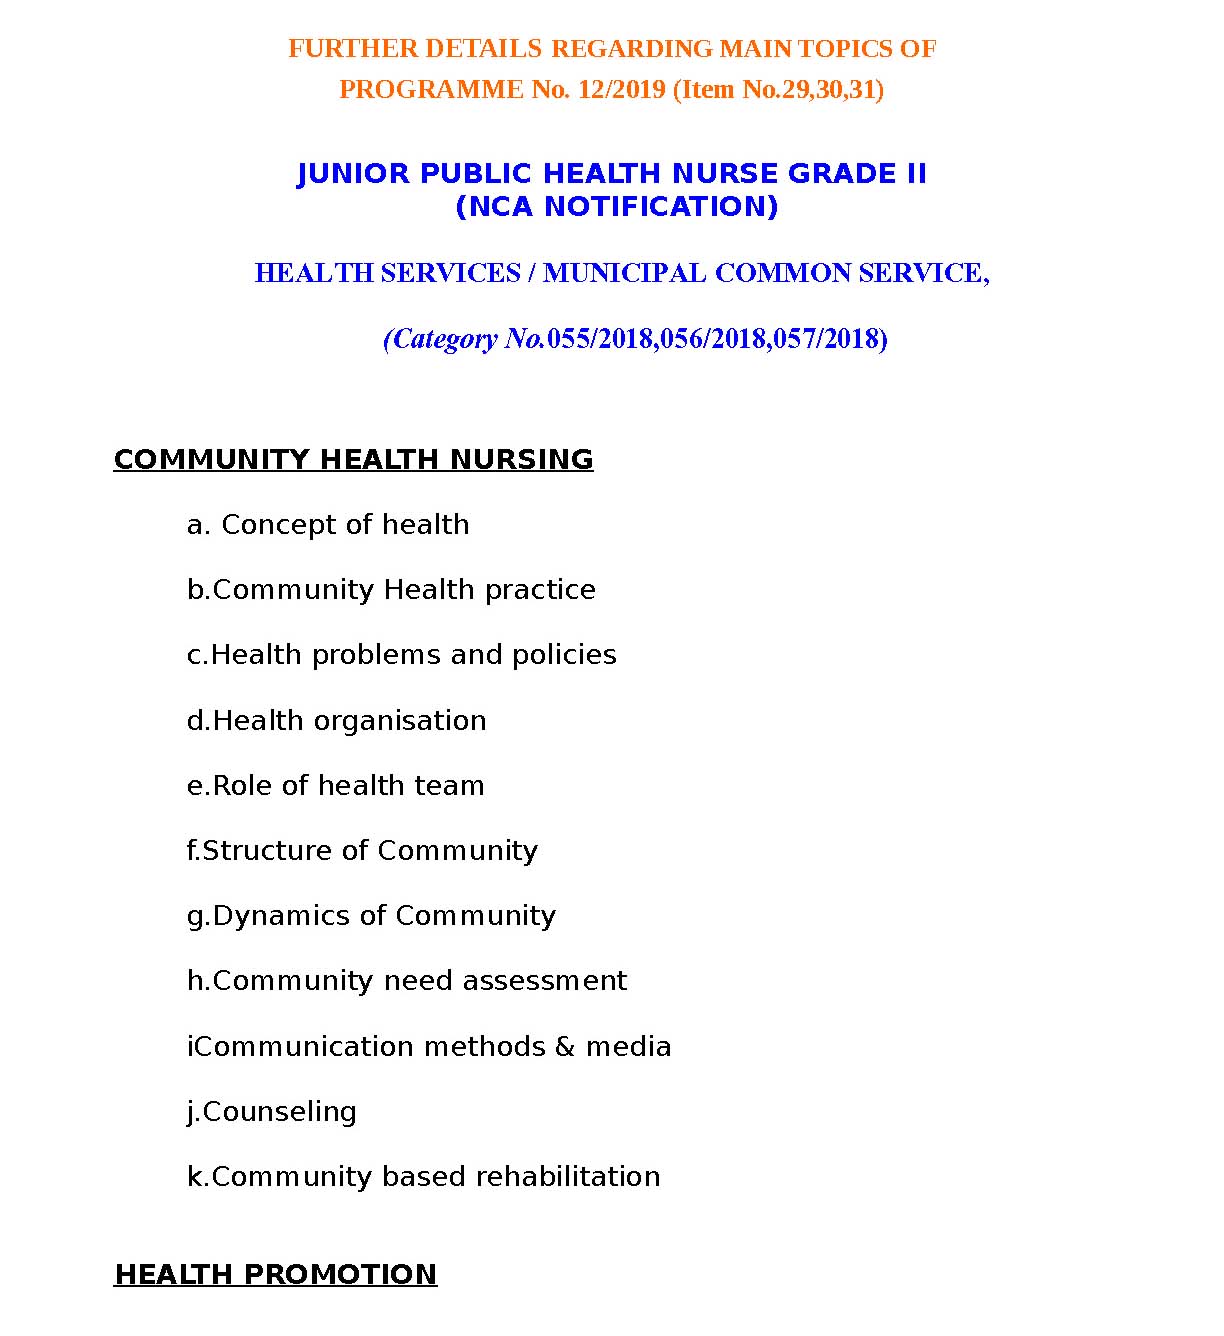 KPSC Syllabus for Junior Public Health Nurse Grade II Exam 2019 - Notification Image 1